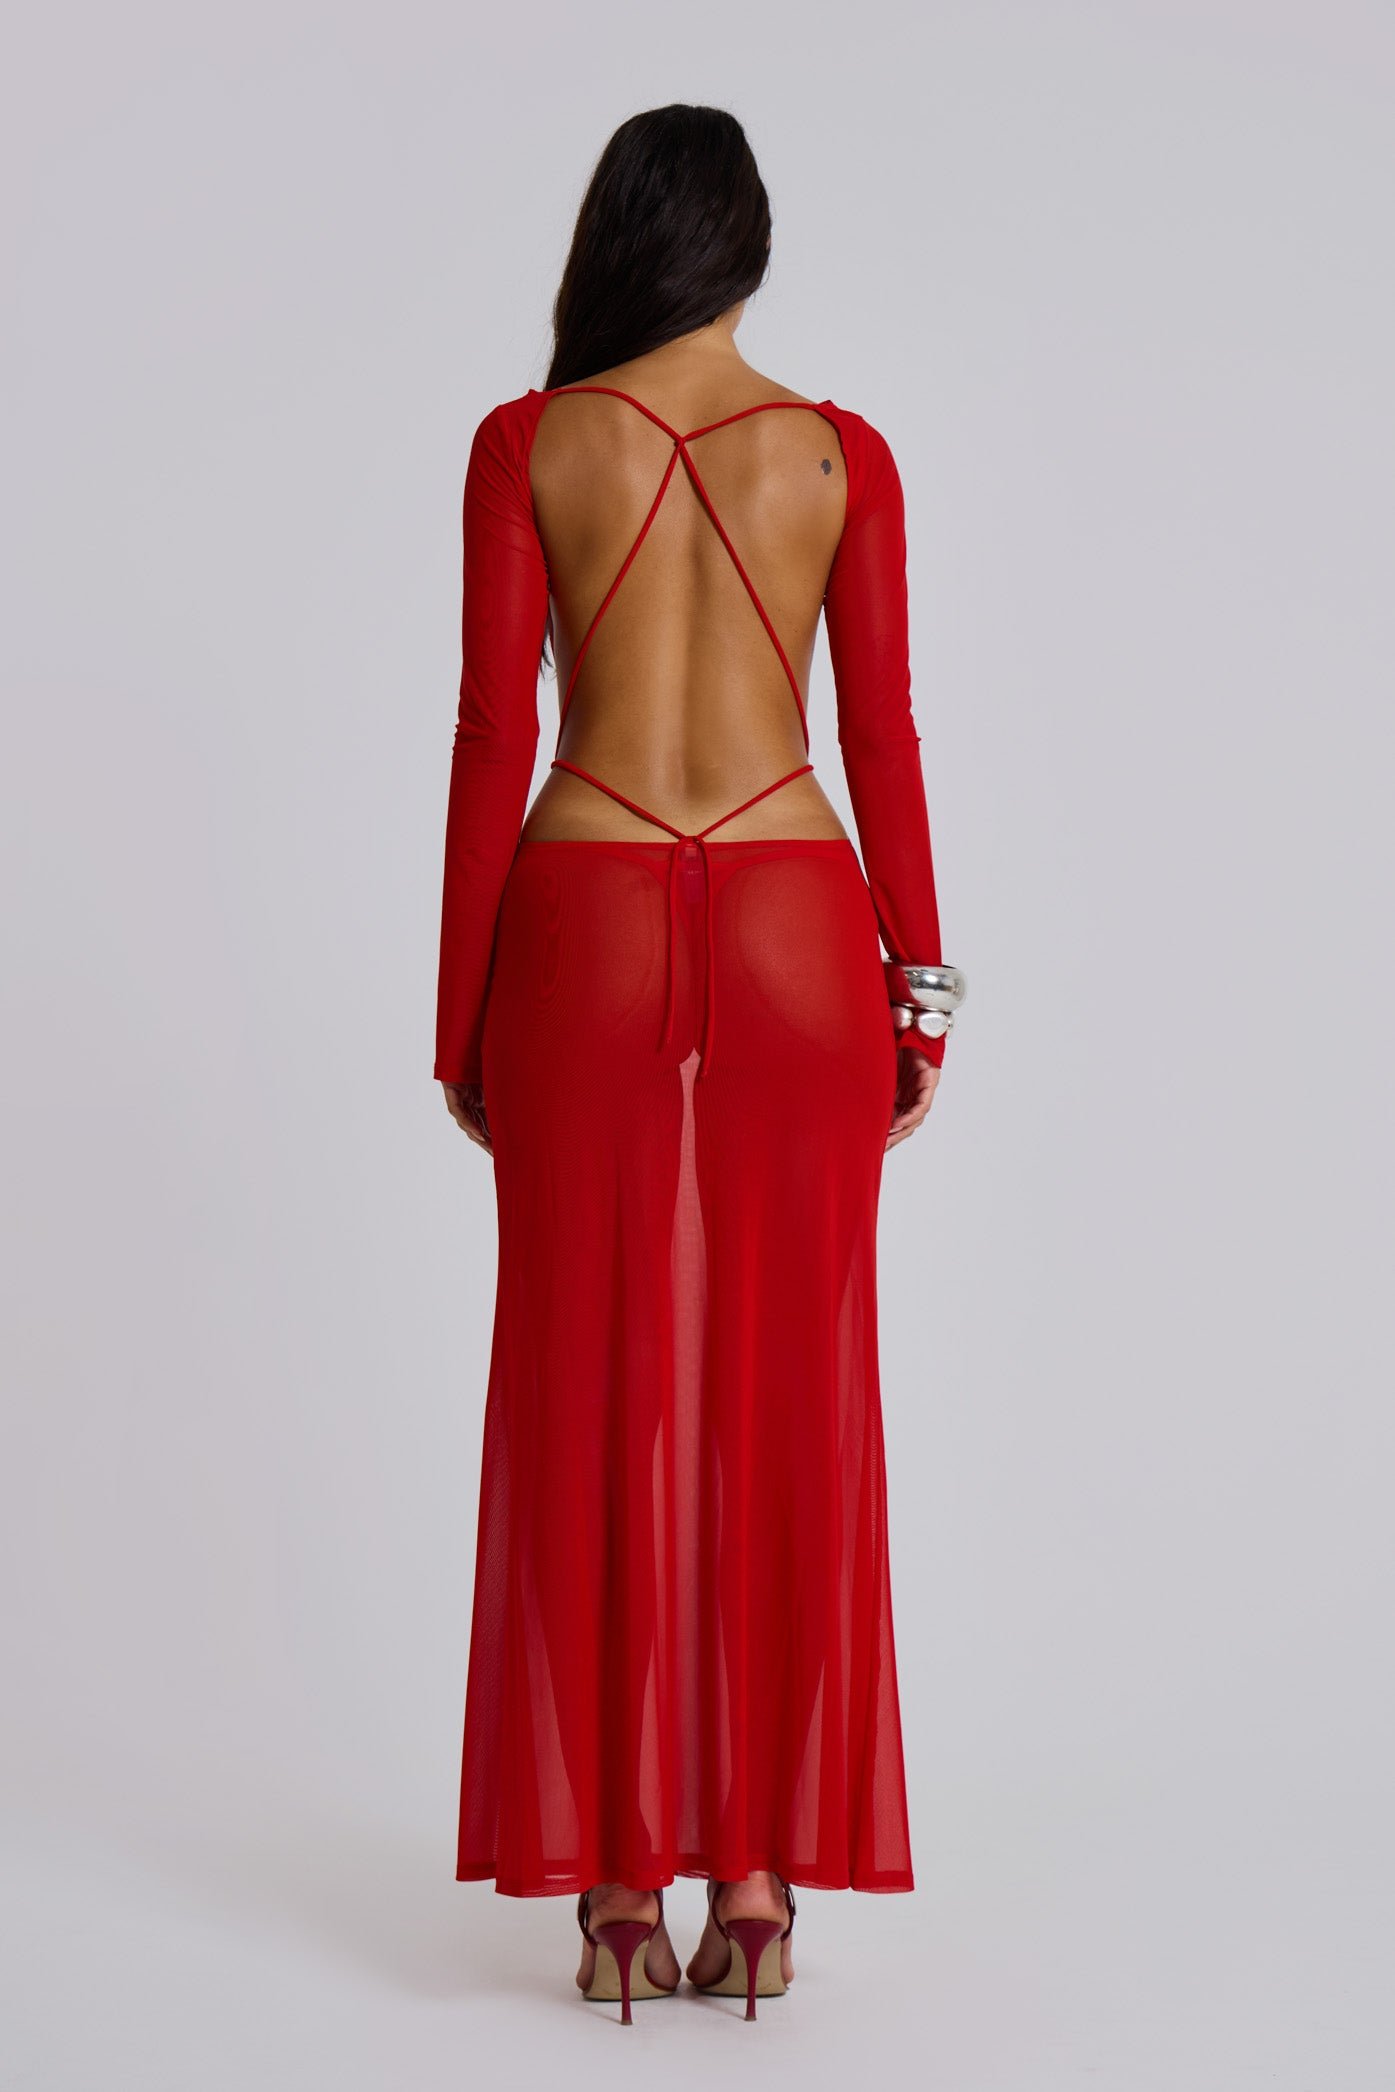 Ziva Dress in Red